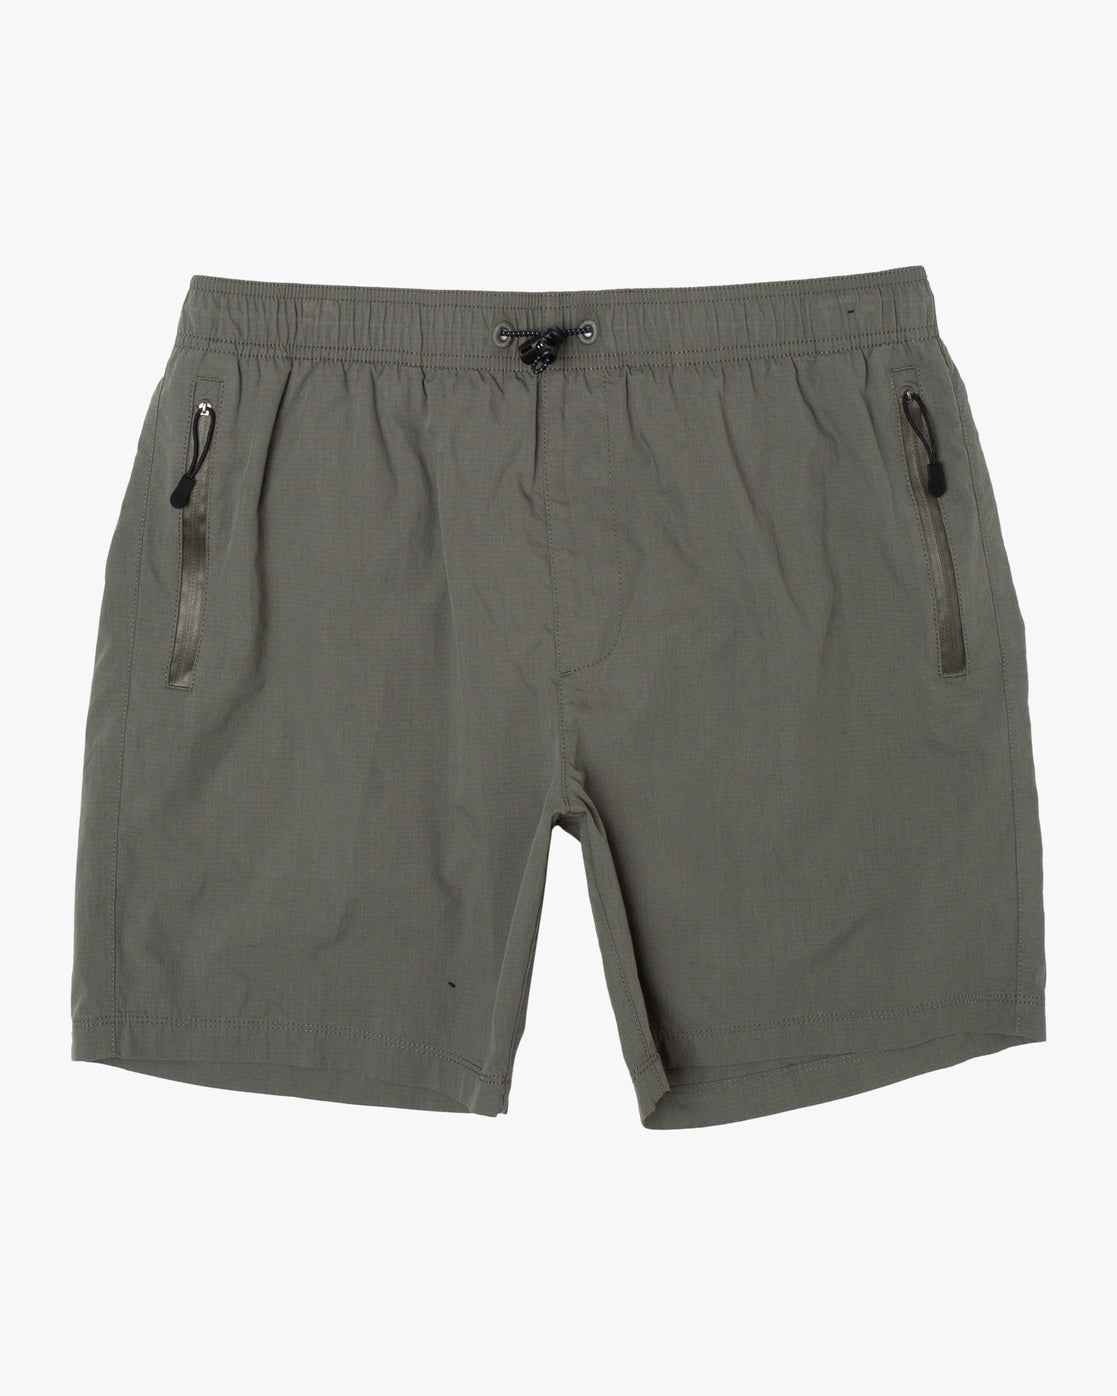 Brodie 2 Hybrid Elastic Shorts 17” - Olive – RVCA.com